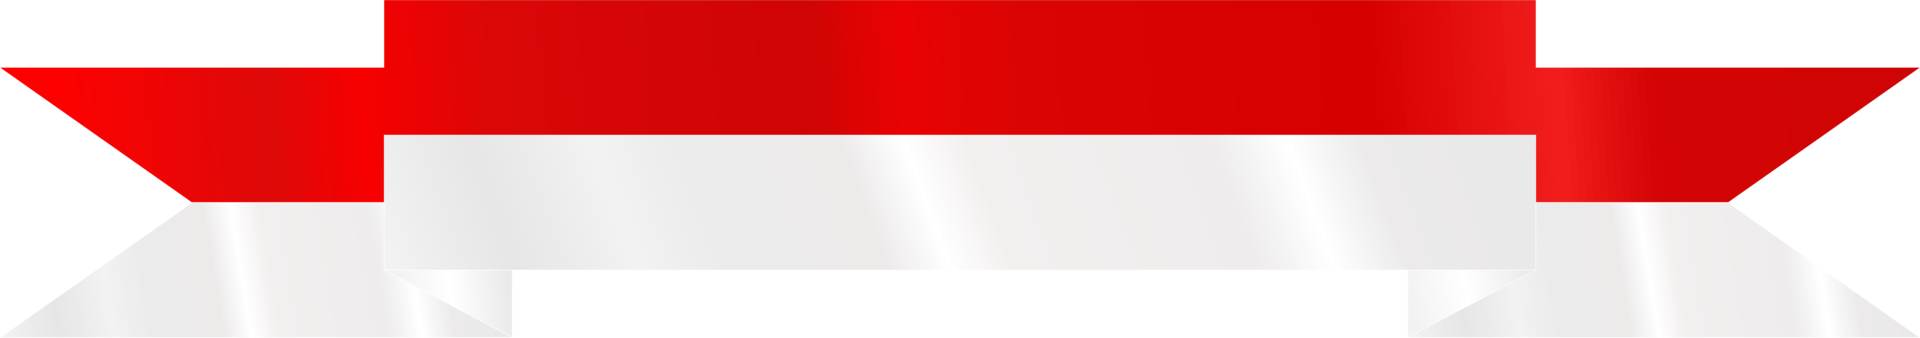 Indonesien Flagge Band, indonesisch Flagge Band rot Weiß transparent Hintergrund png